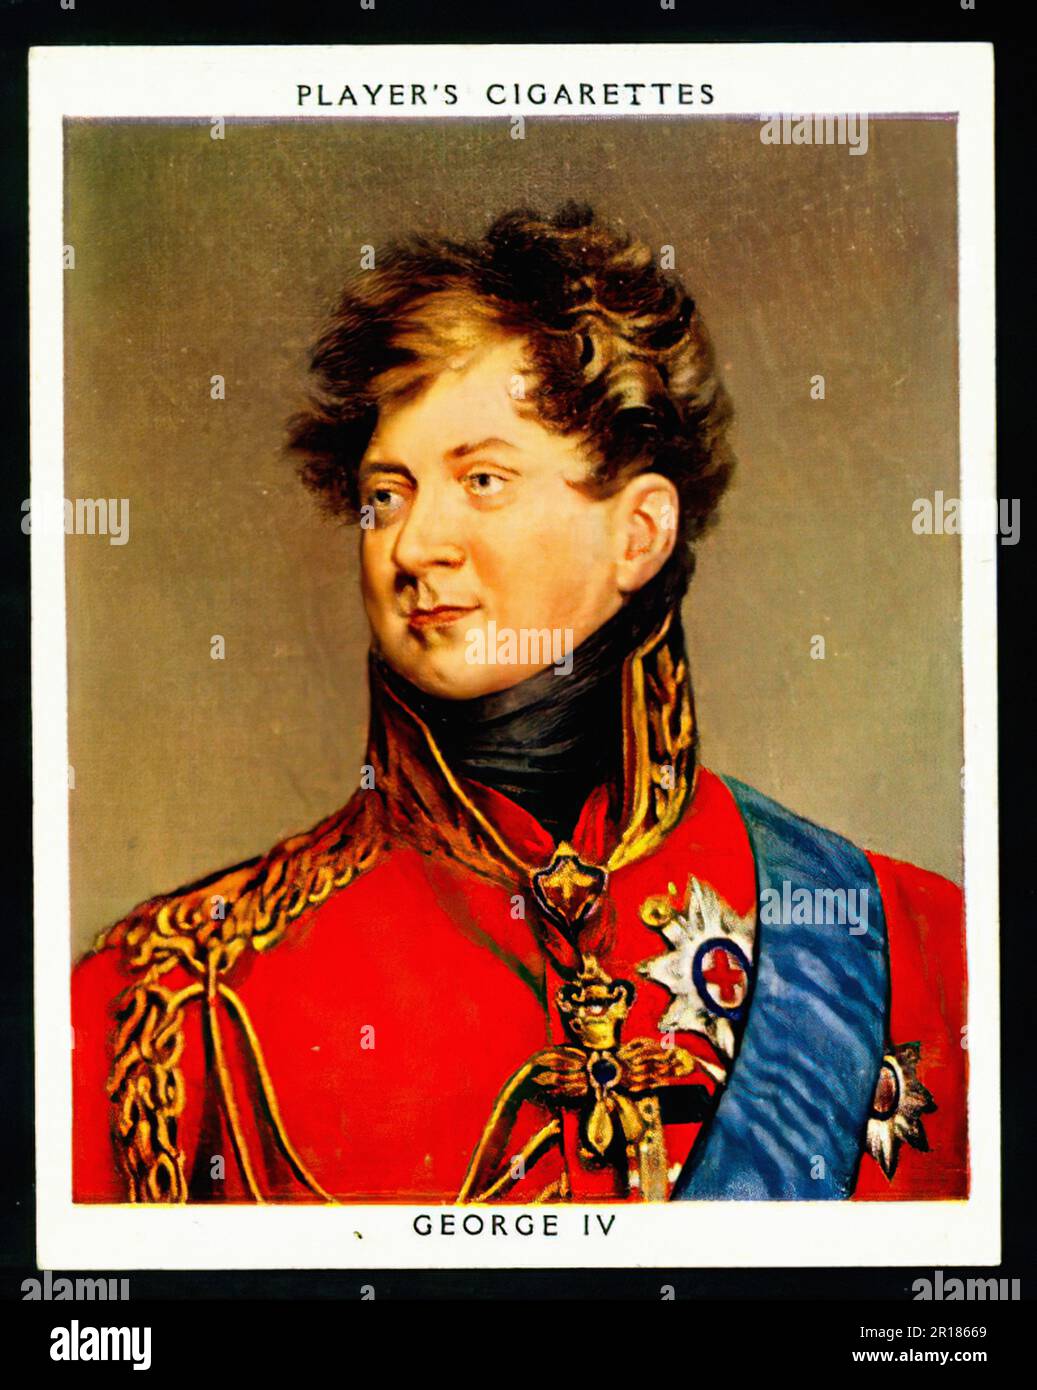 King George IV - Vintage Cigarette Card 02 Stock Photo